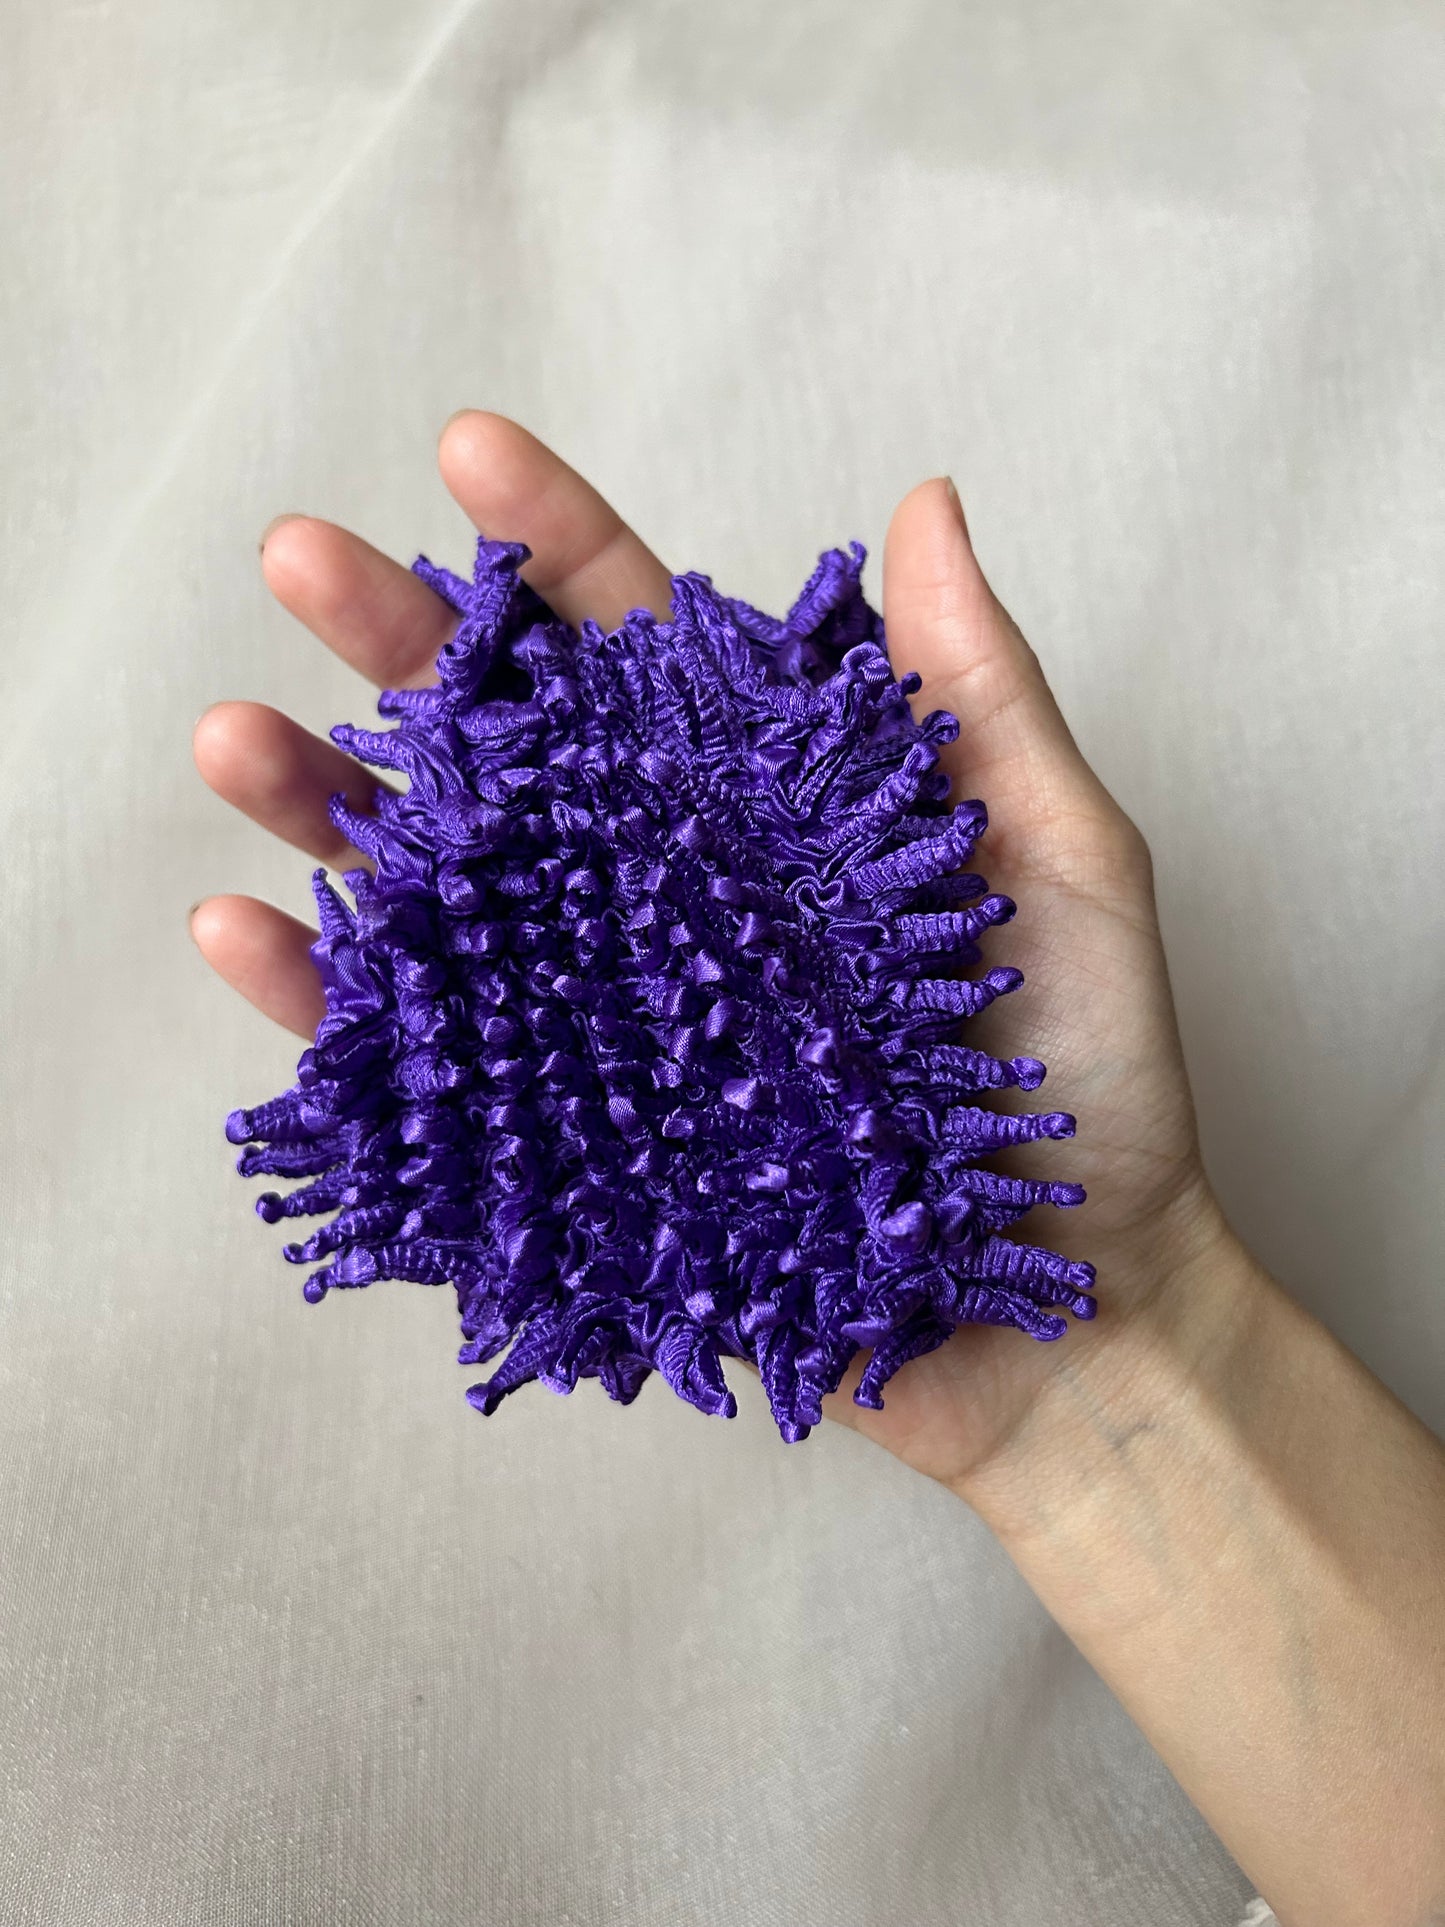 Purple Pineapple Foldable Reusable Shopping Bag - Flex Totes